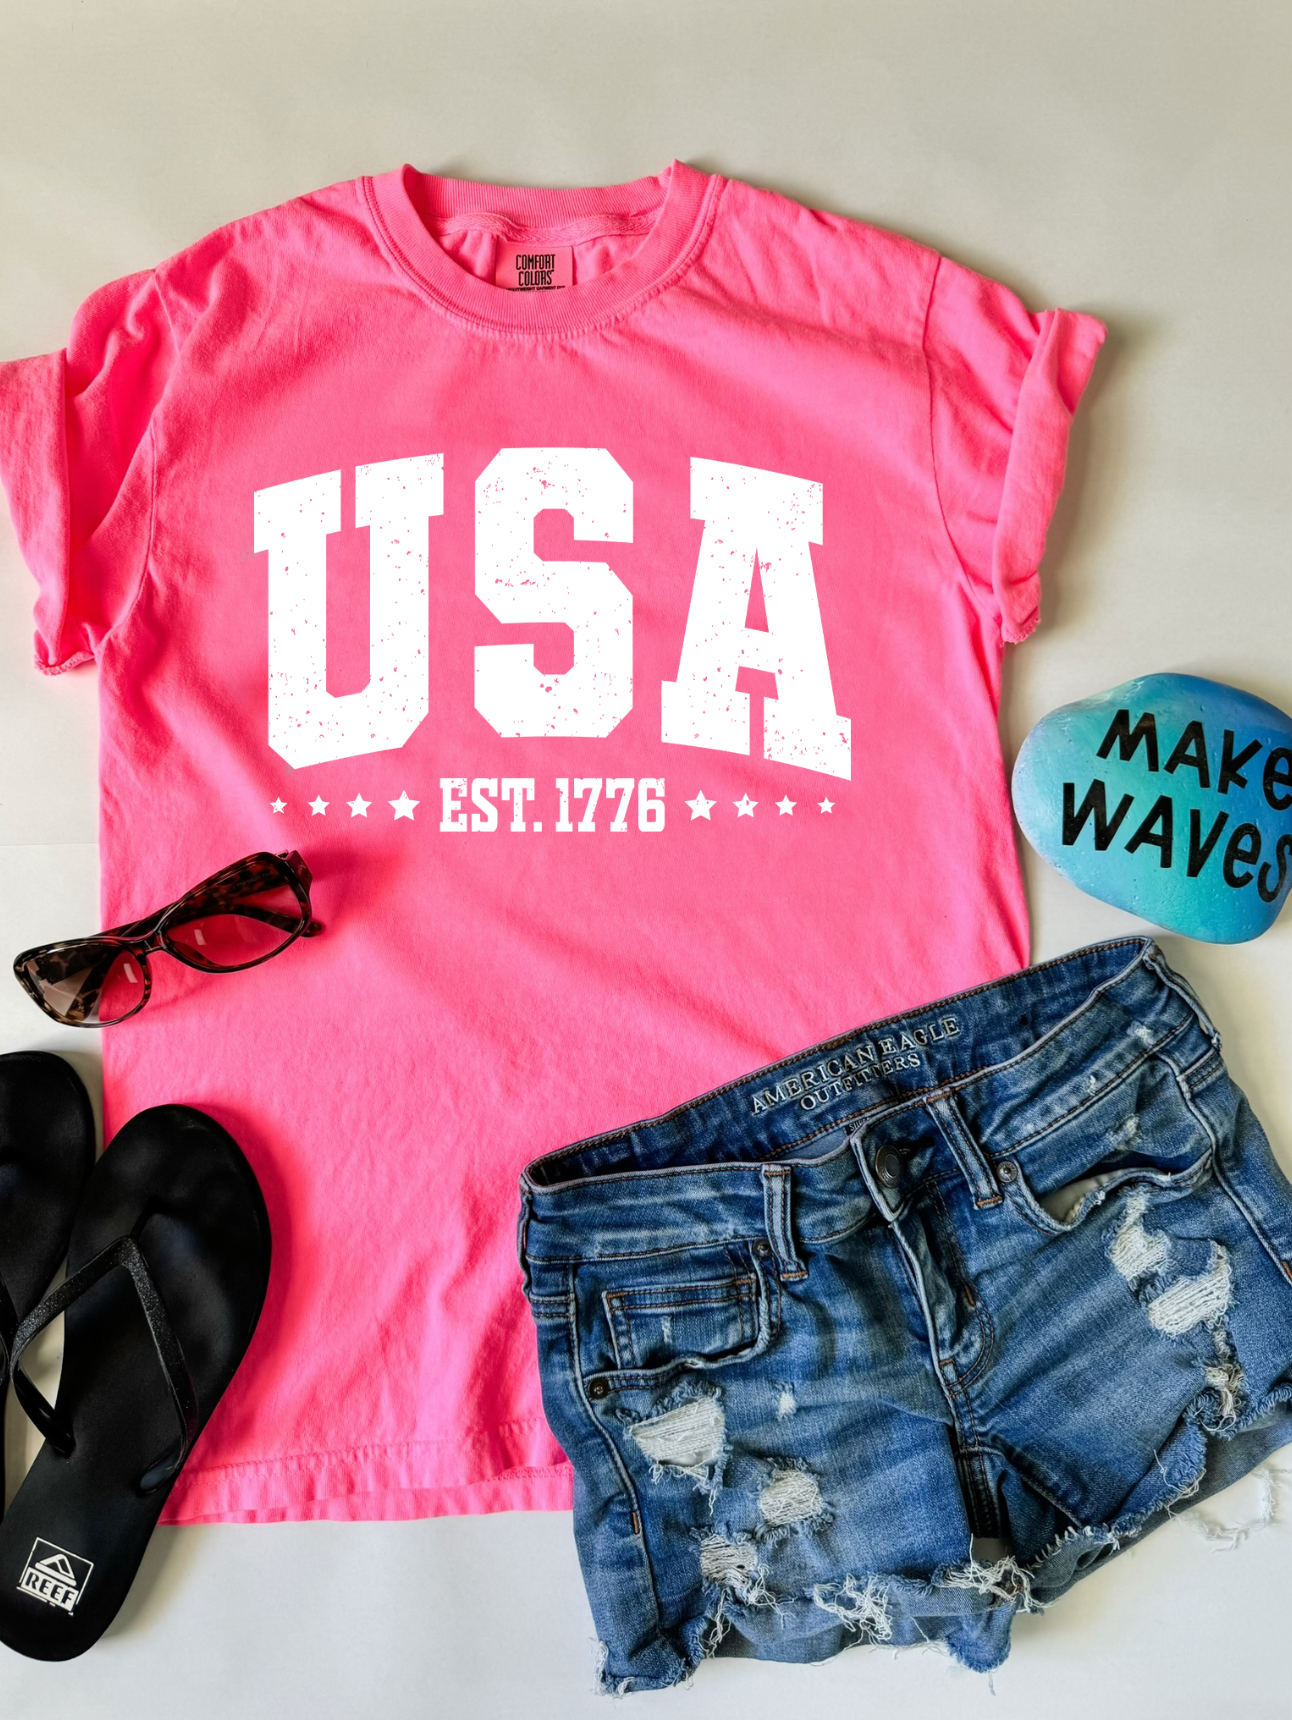 Bright summer beach girl shirt. USA Est. 1776, 4th of July shirt. Comfort Color Neon Pink.